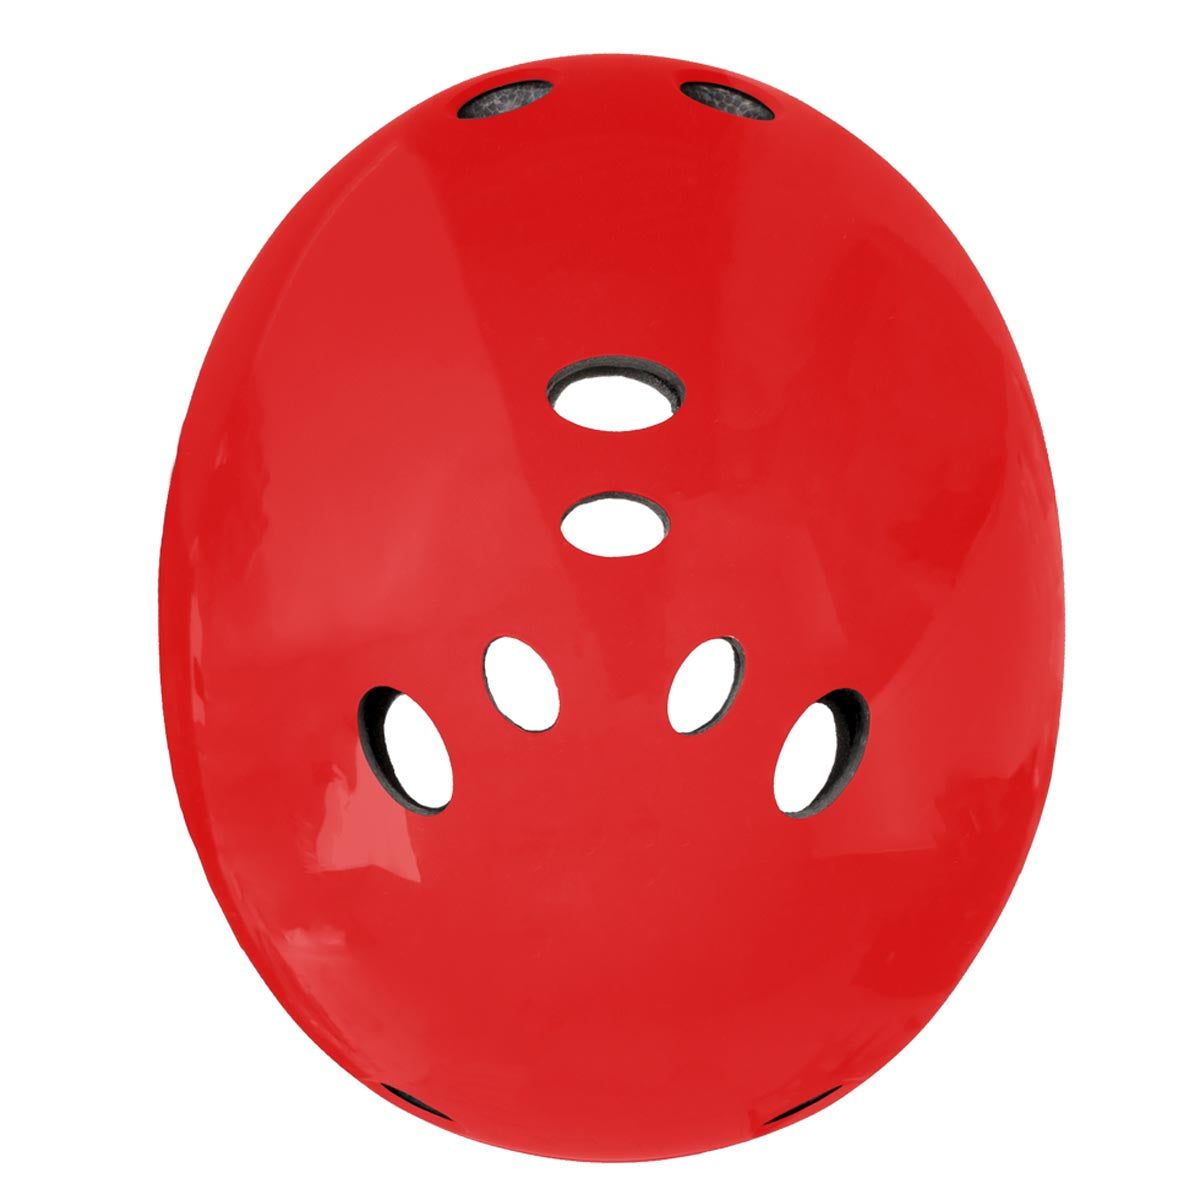 Triple Eight Certified Sweatsaver Helmet - Blood Red Glossy image 3